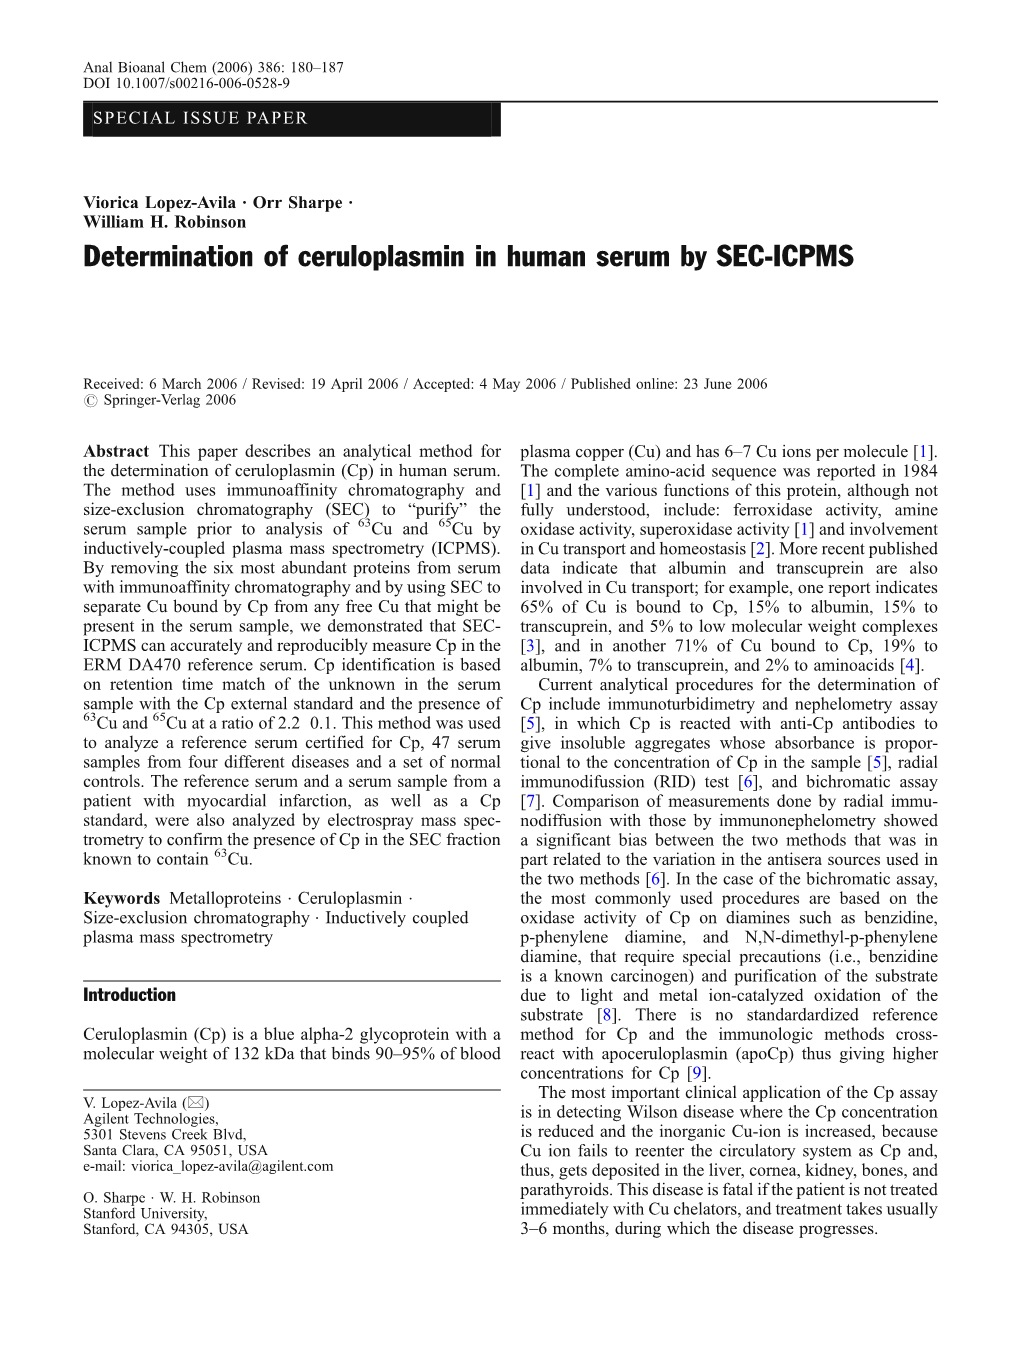 Determination of Ceruloplasmin in Human Serum by SEC-ICPMS